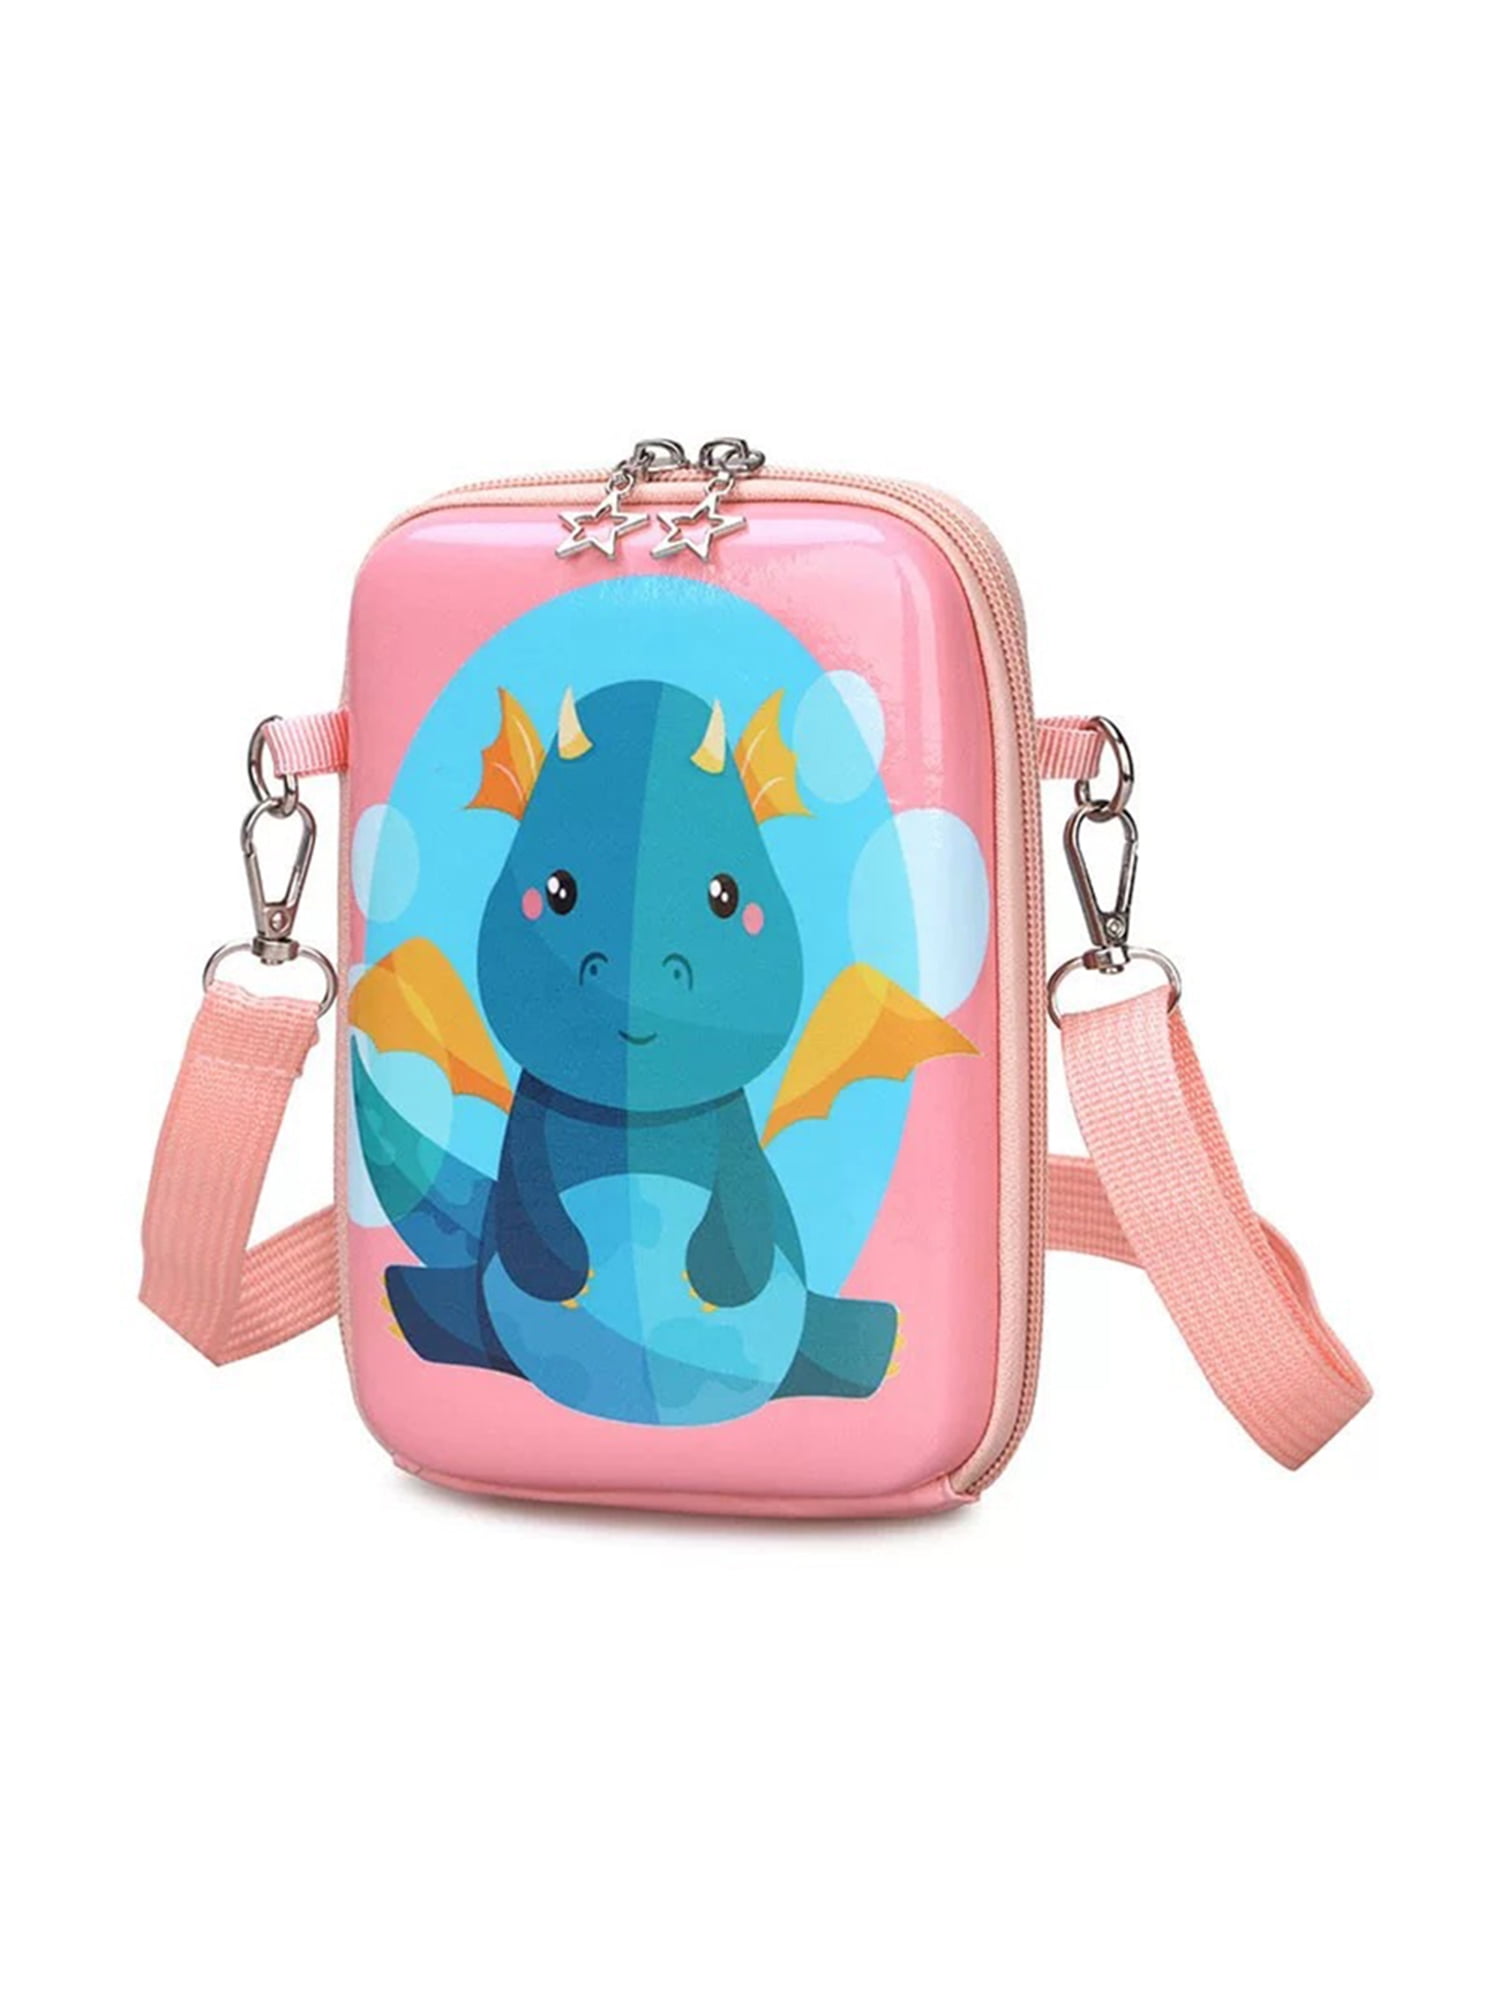 Avamo Child Cell Phone Holder Cartoon Shoulder Bag Large Capacity